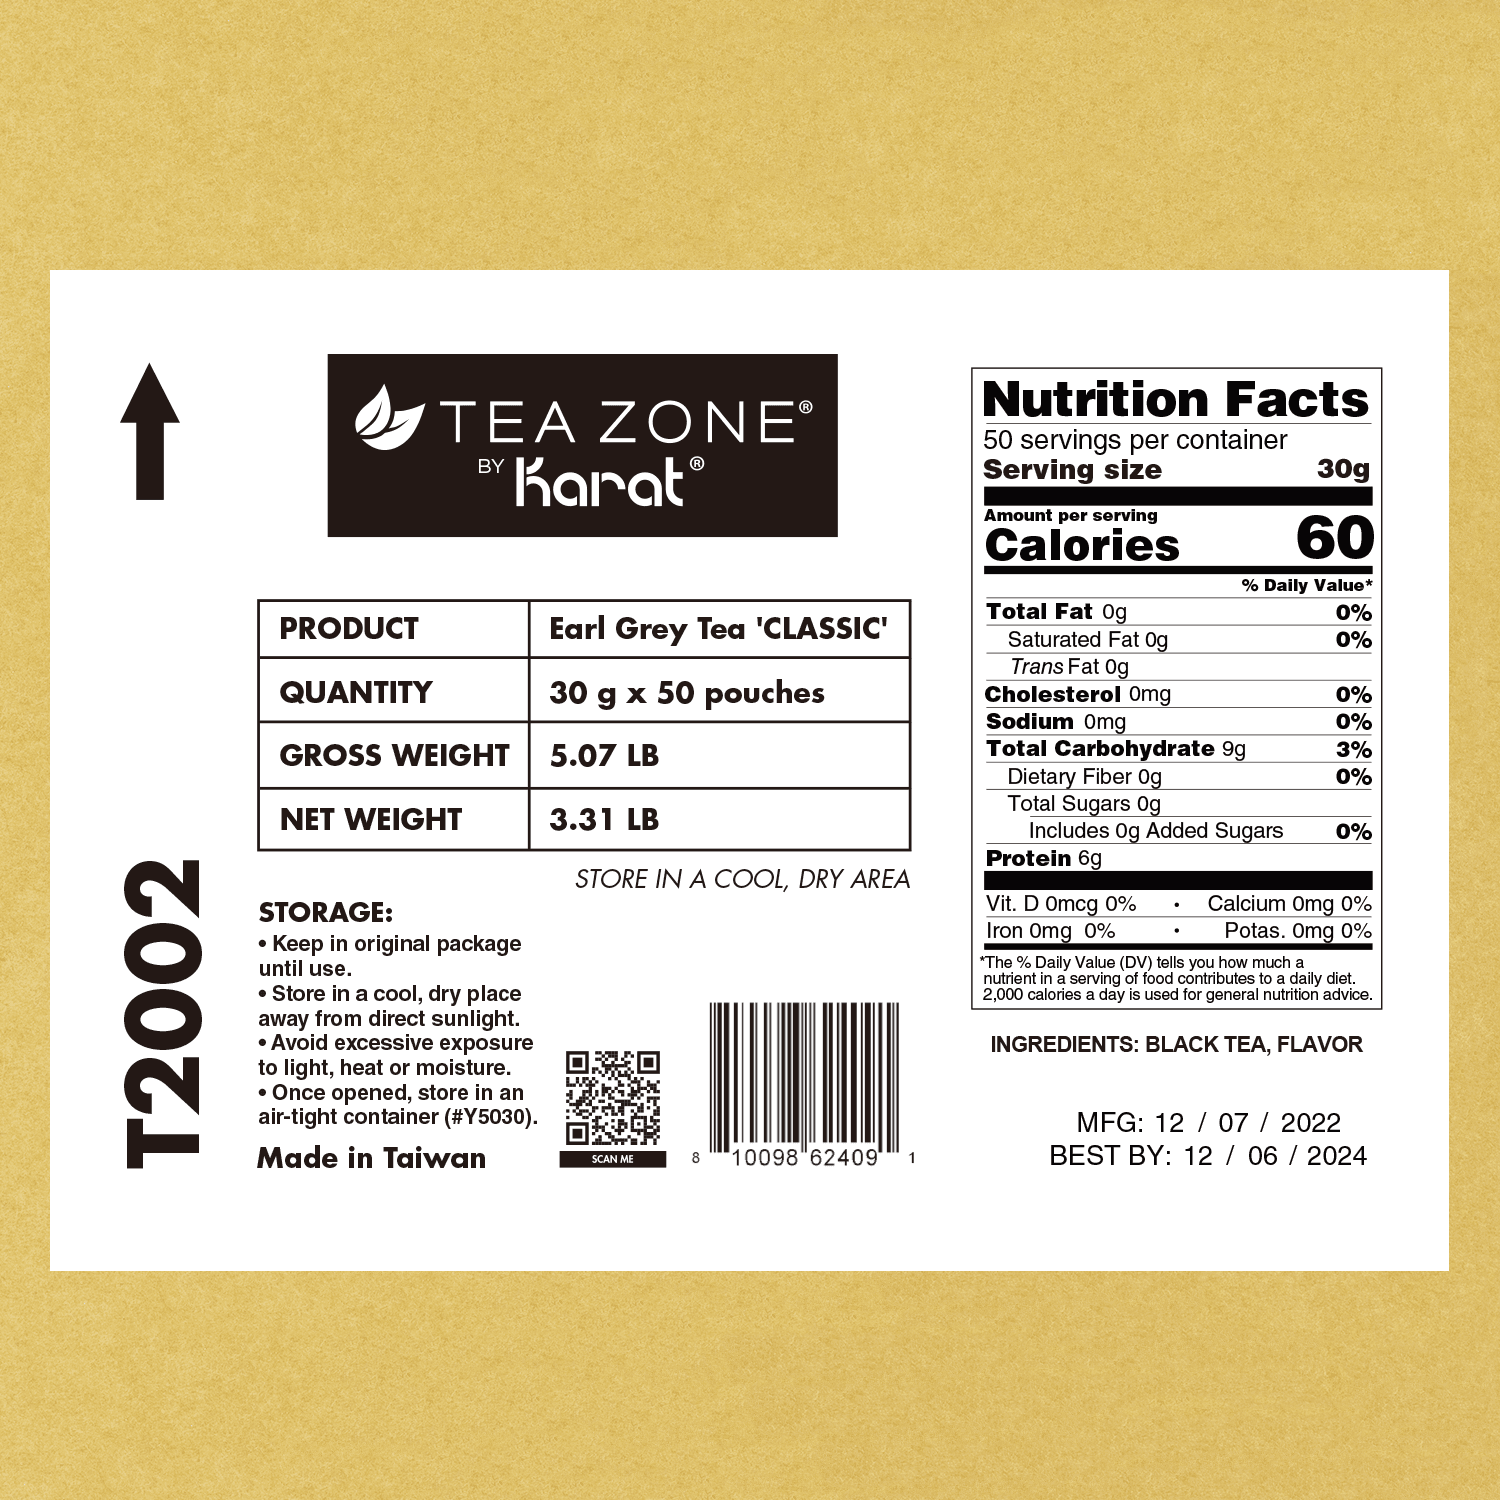 Tea Zone Classic Earl Grey Tea nutrition facts label